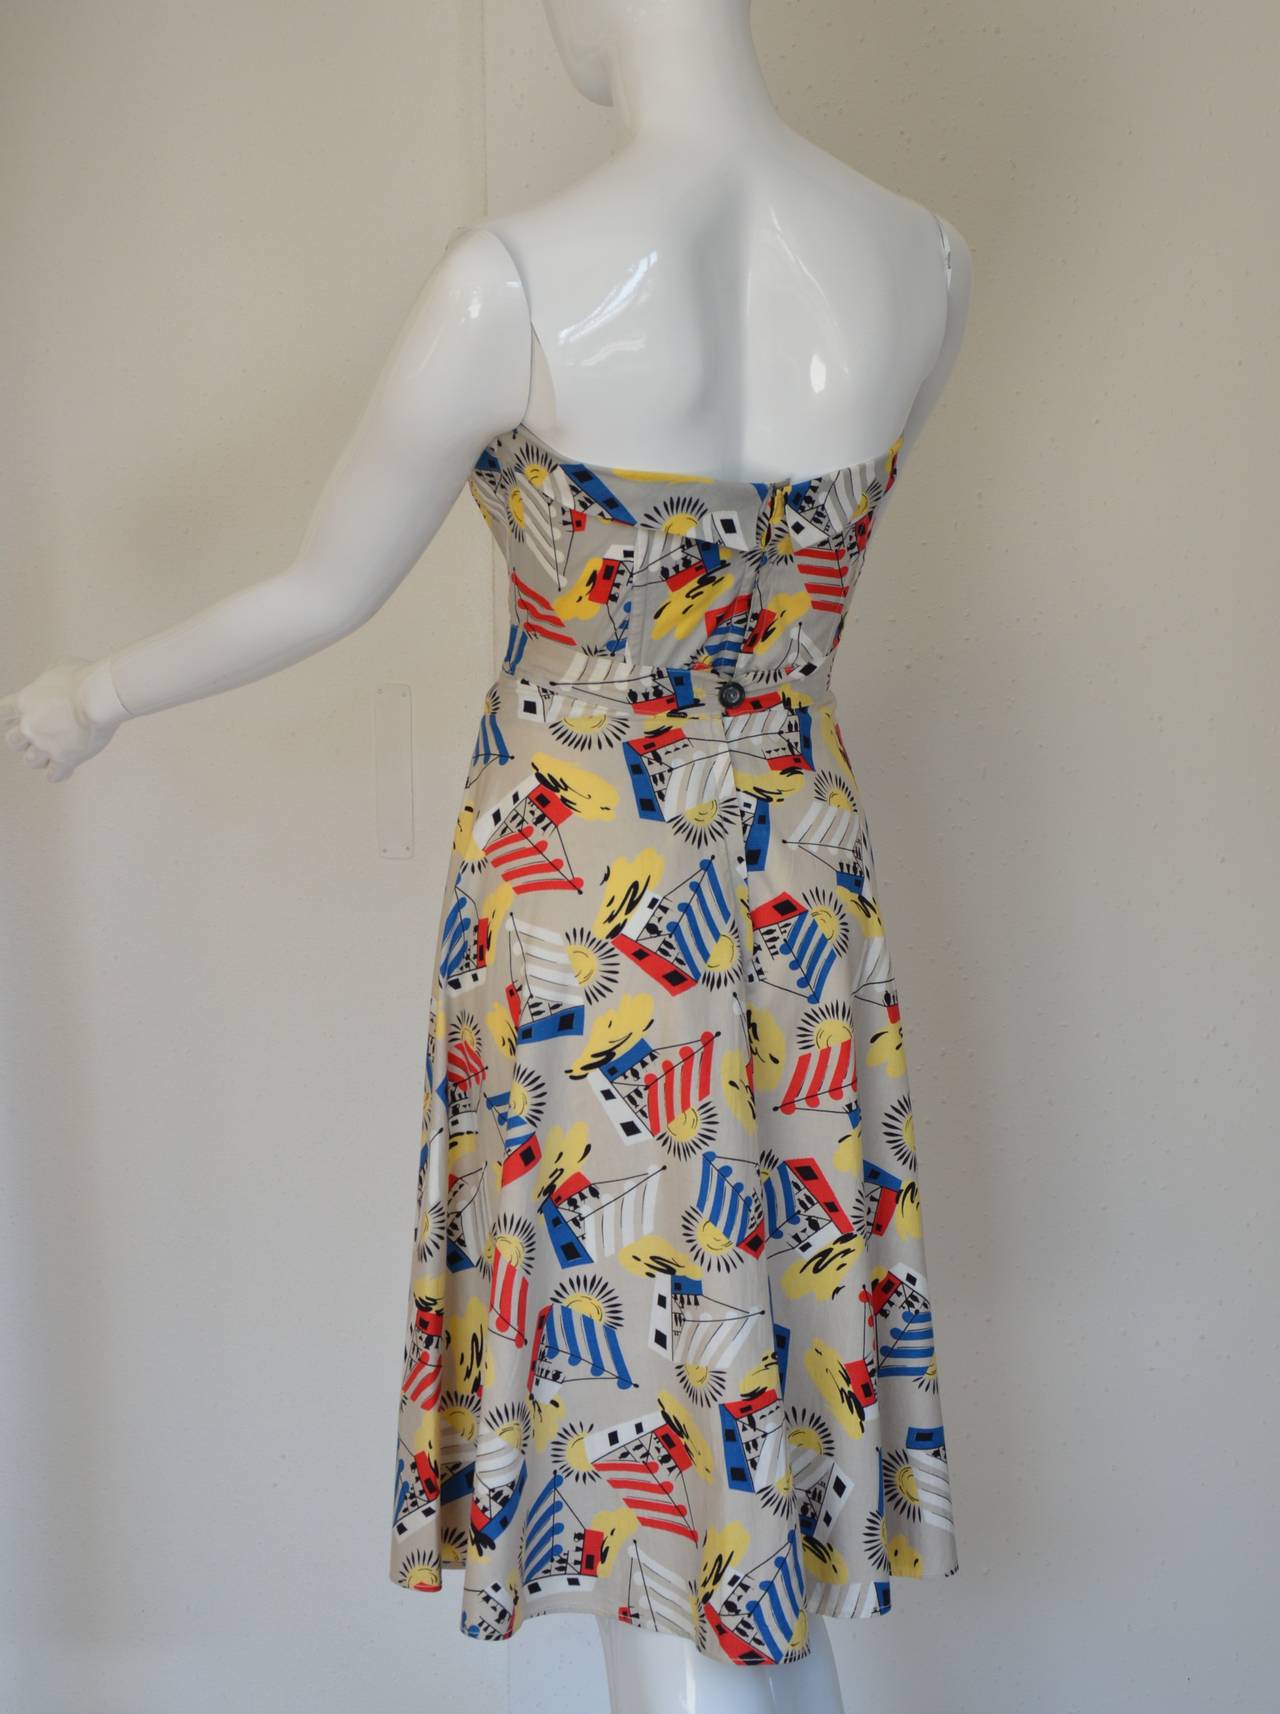 Women's 1950s Cotton Sun-Suit with Beach-Bar print, good bright colors, very fresh